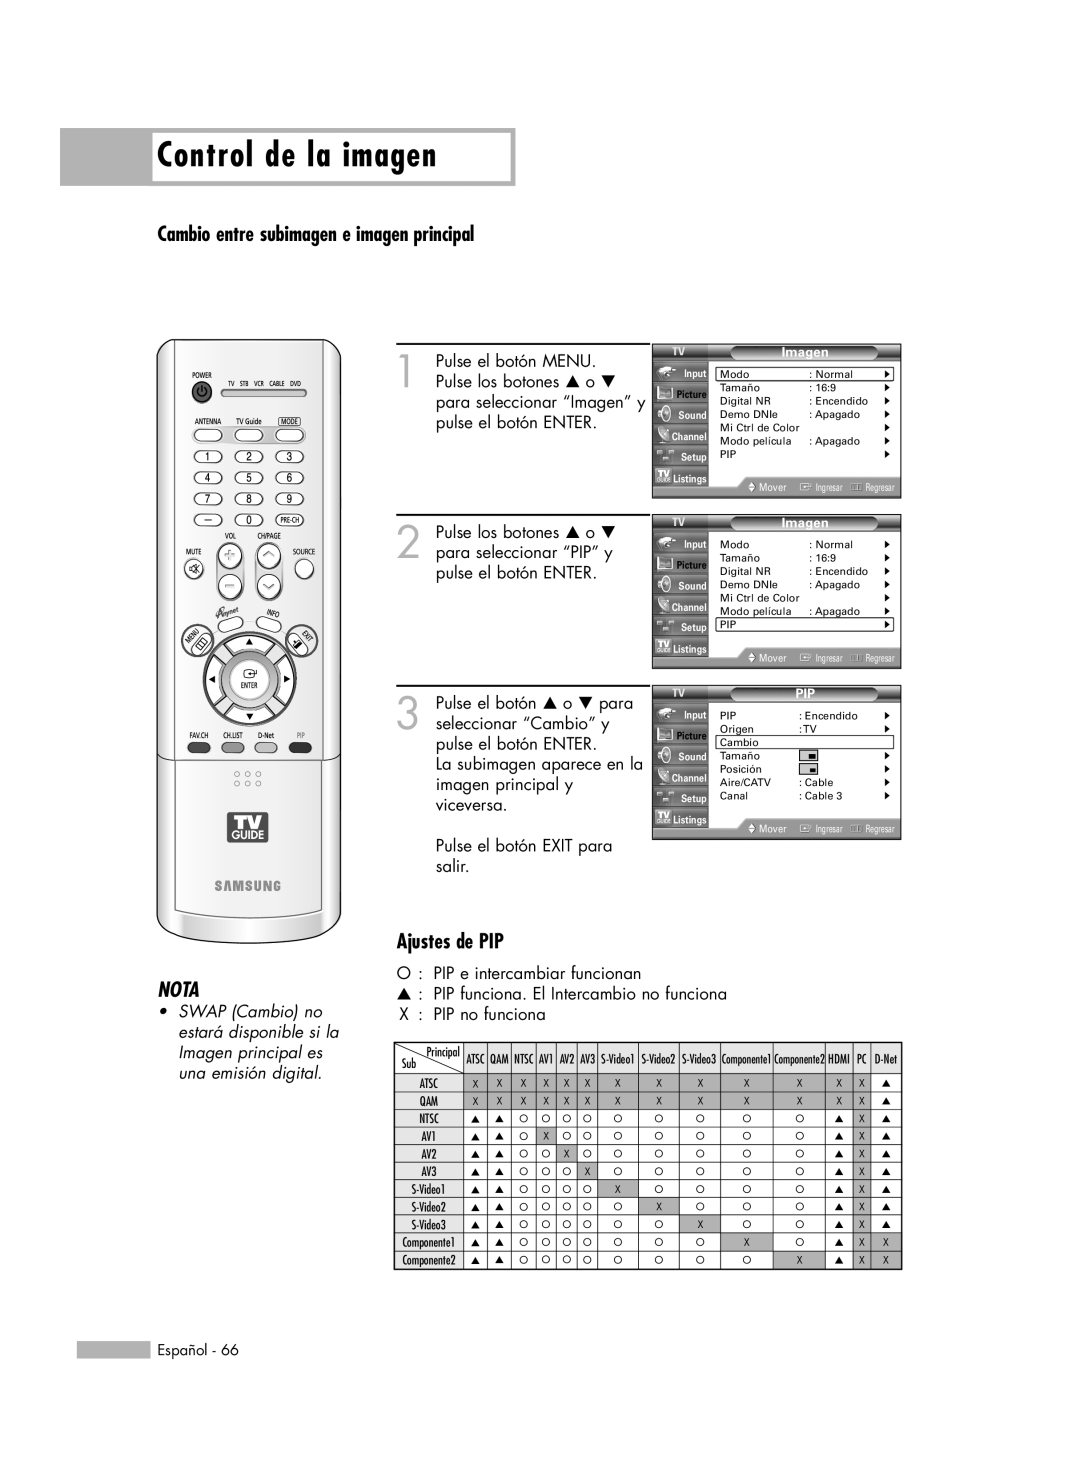 Samsung HL-R5678W, HL-R6178W manual Ajustes de PIP, Control de la imagen, Nota, Cambio entre subimagen e imagen principal 